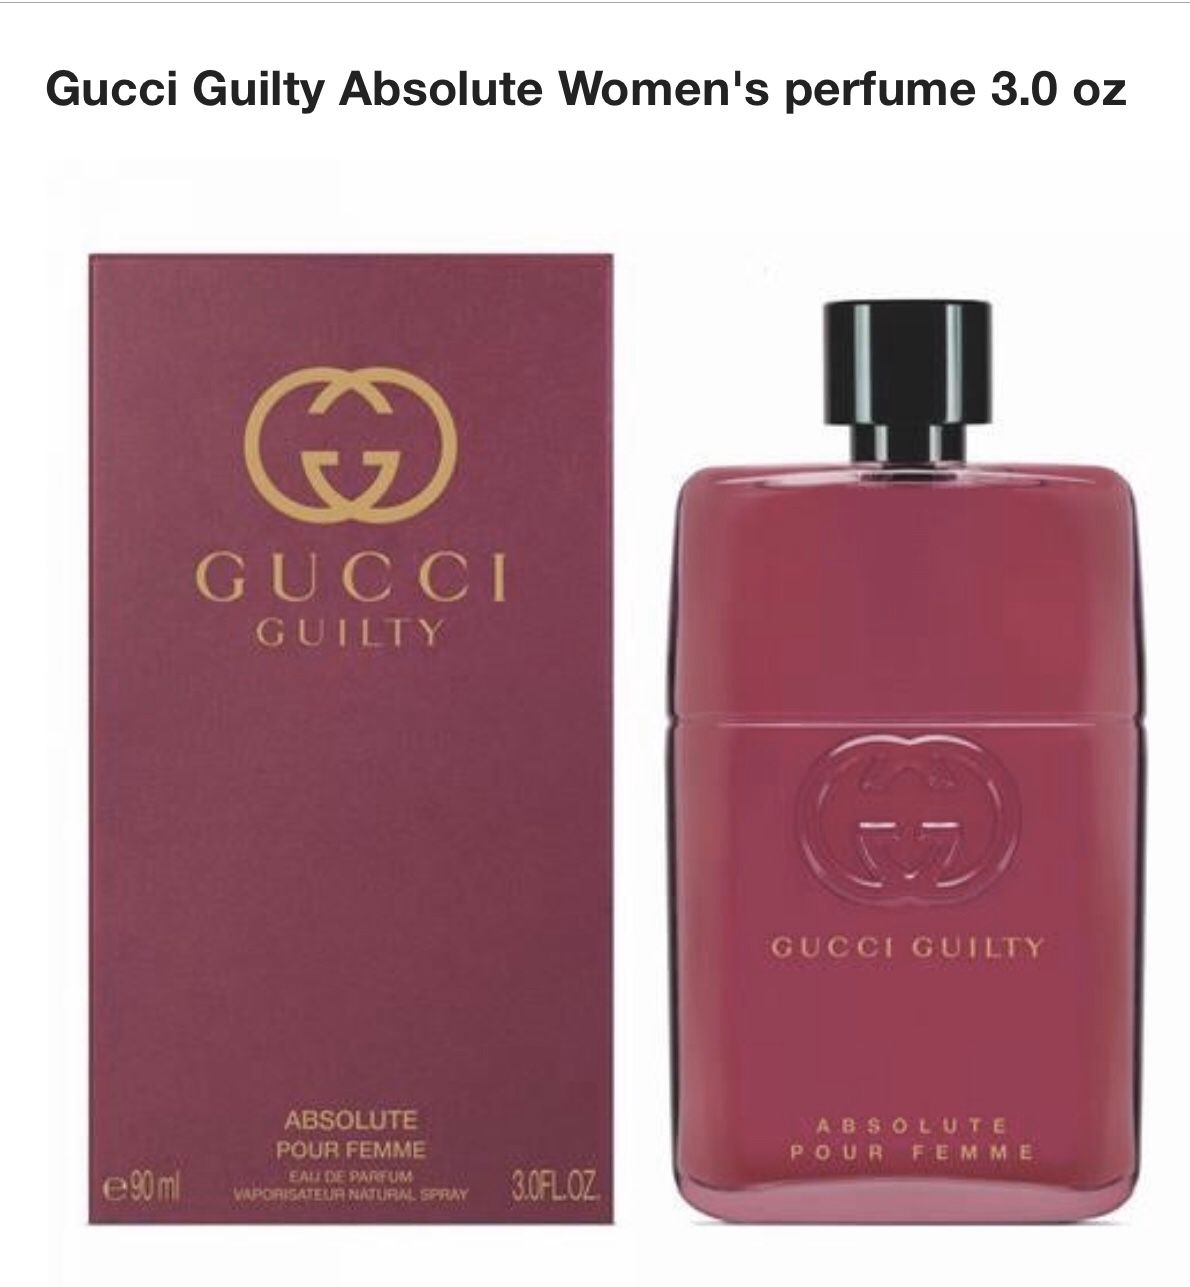 Cucci guilty absolute perfume 3.0oz